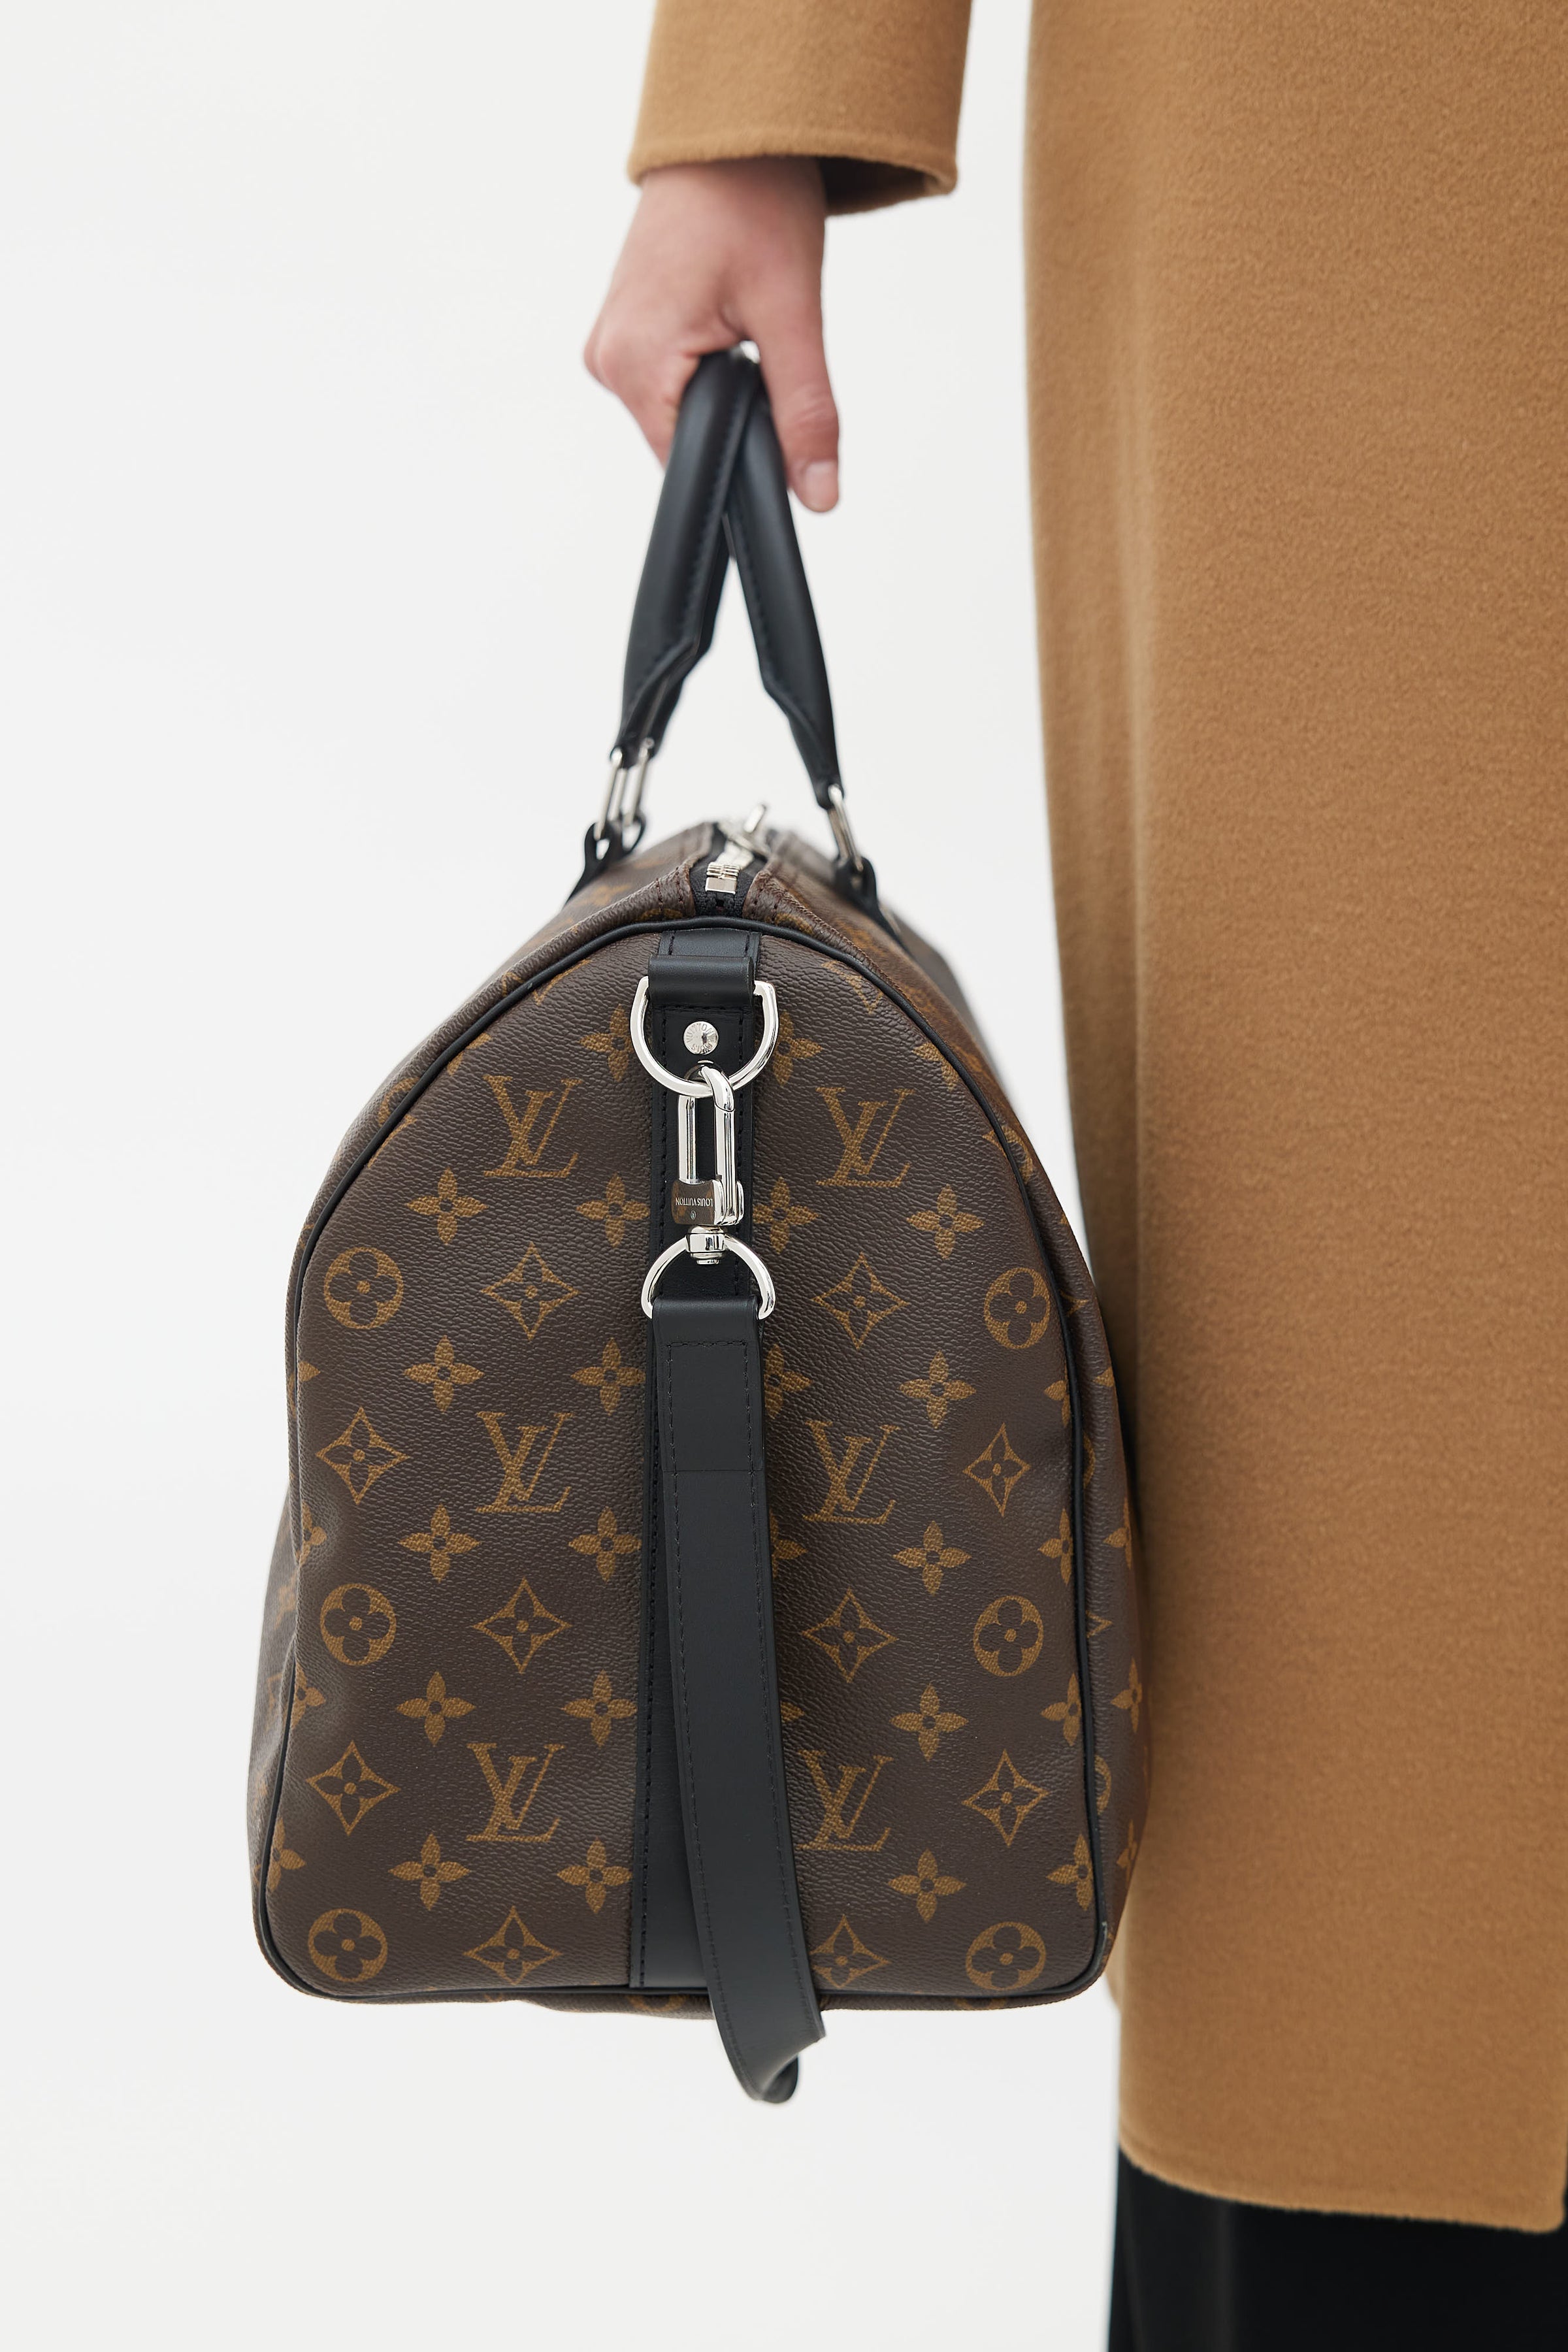 Gorgeous Authentic Louis Vuitton Macassar Monogram Keepall 45 B Duffle Bag